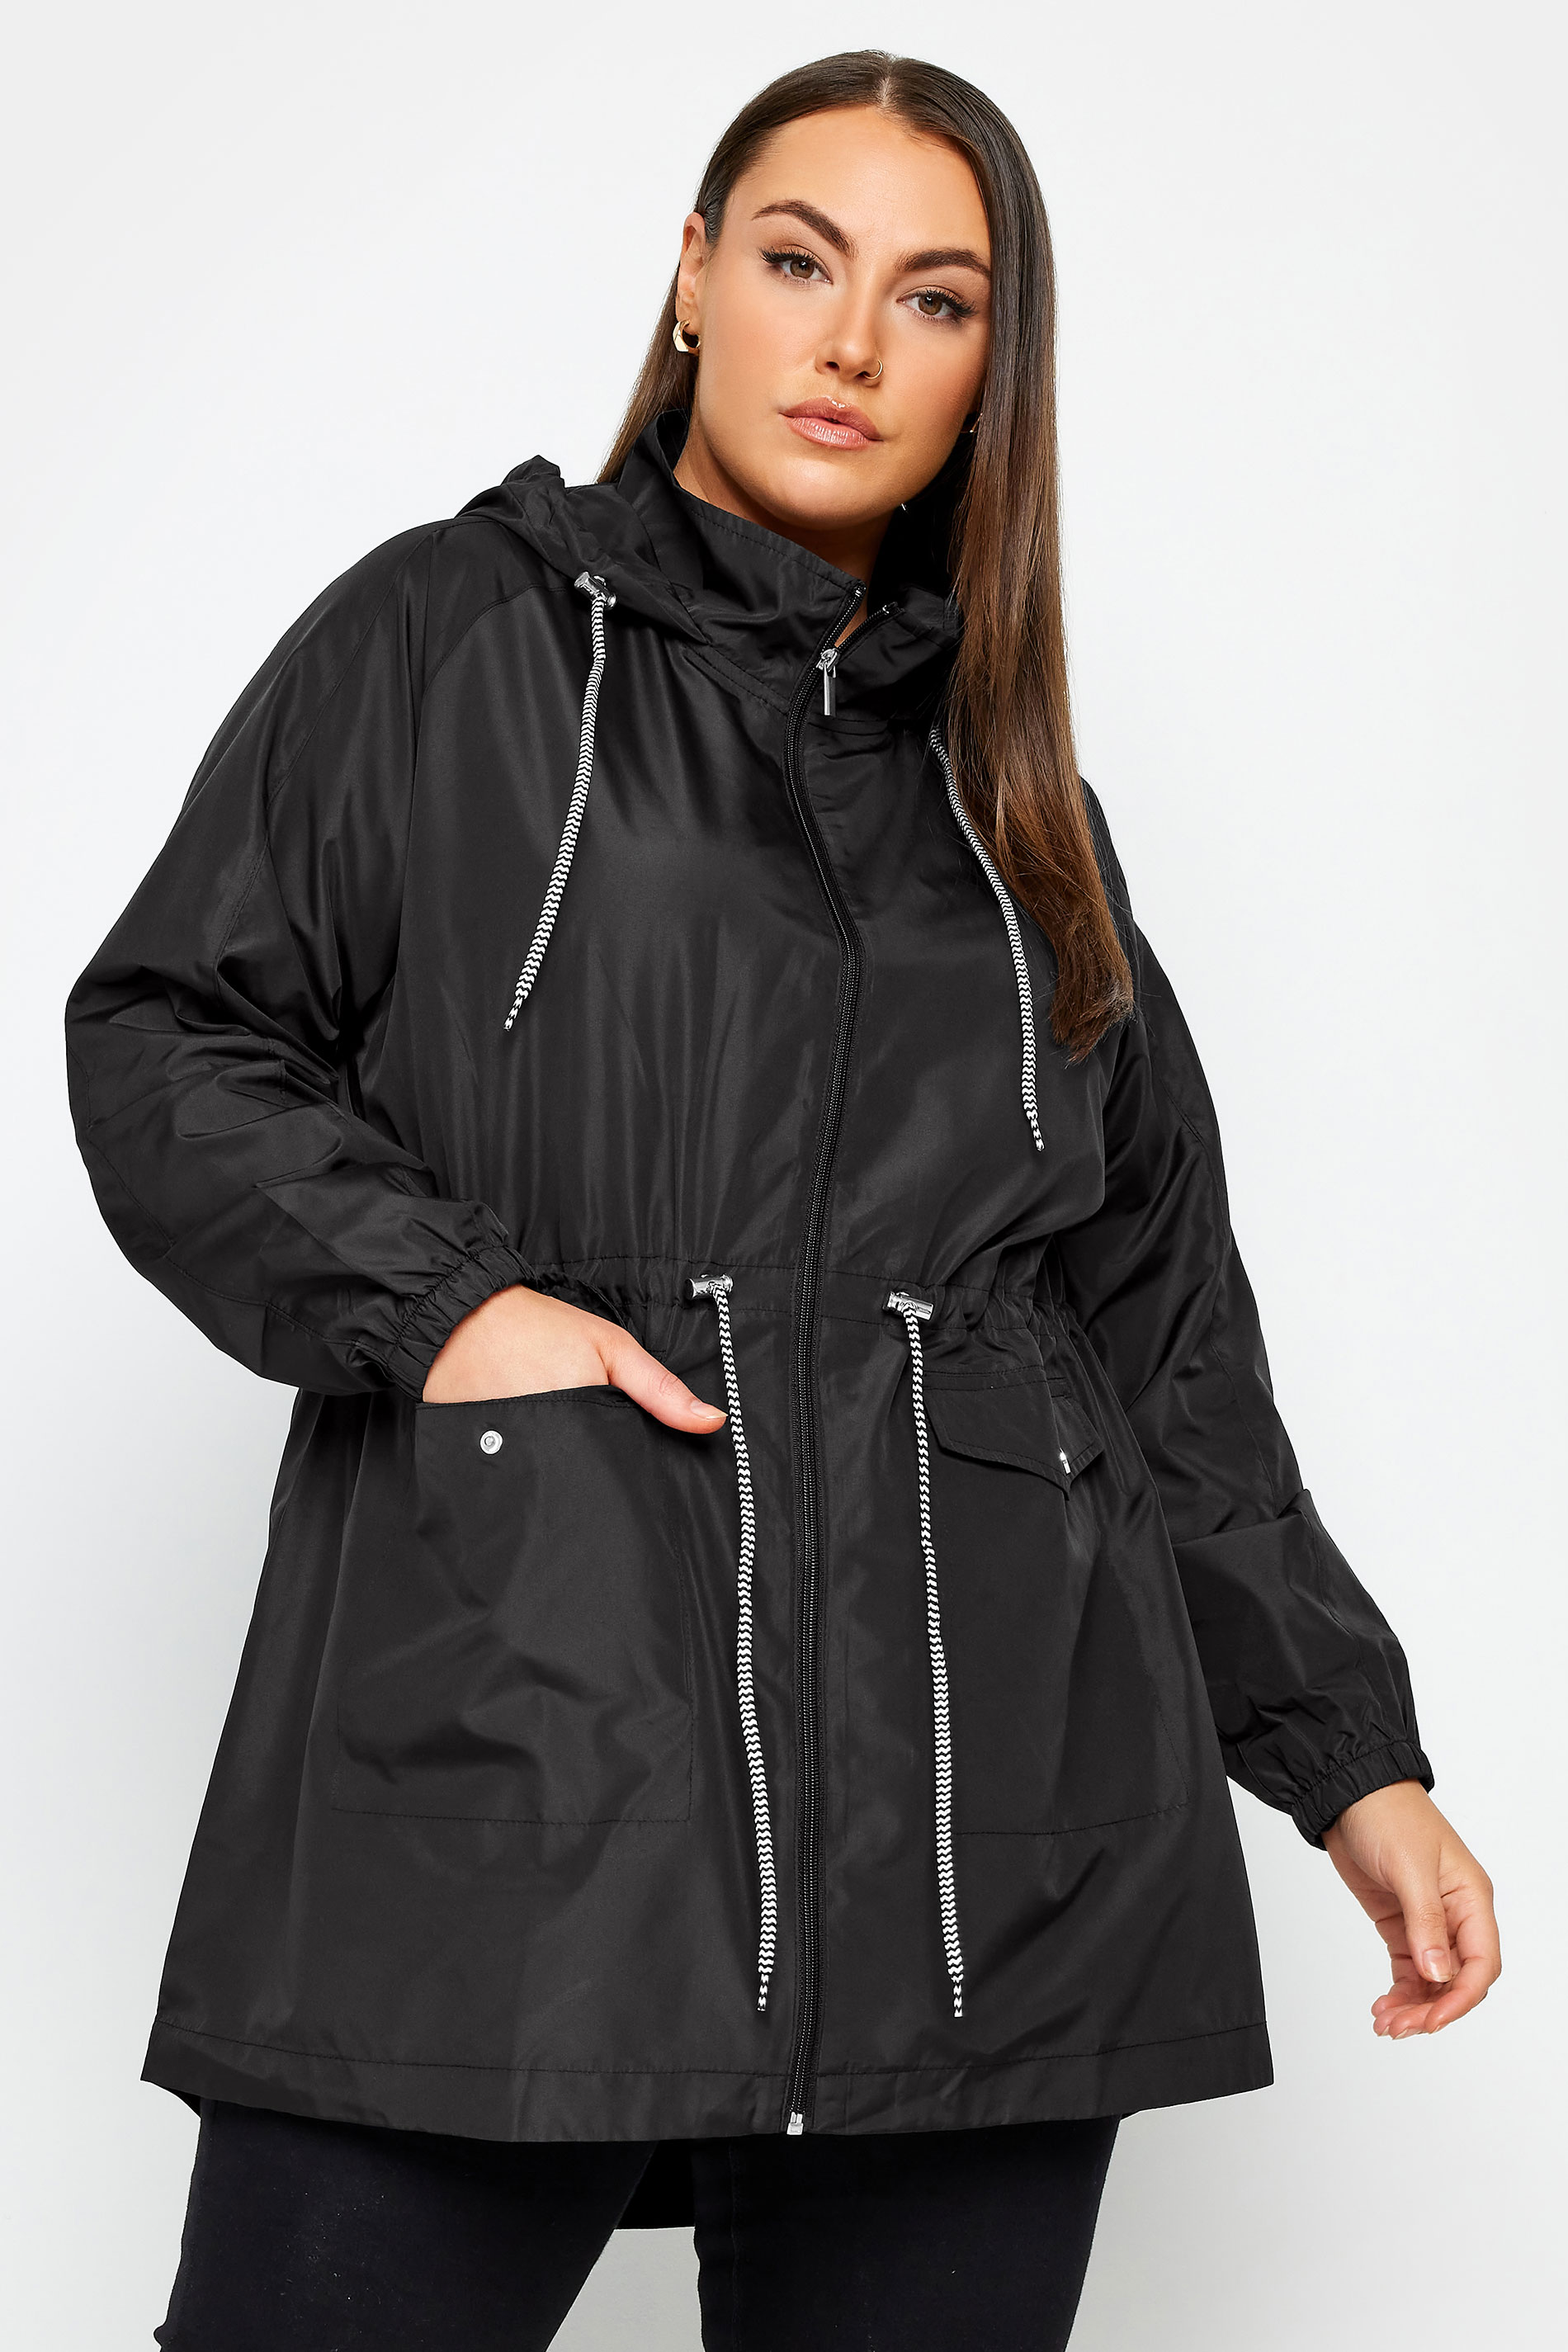 YOURS Plus Size Black Drawstring Lightweight Parka Jacket | Yours Clothing